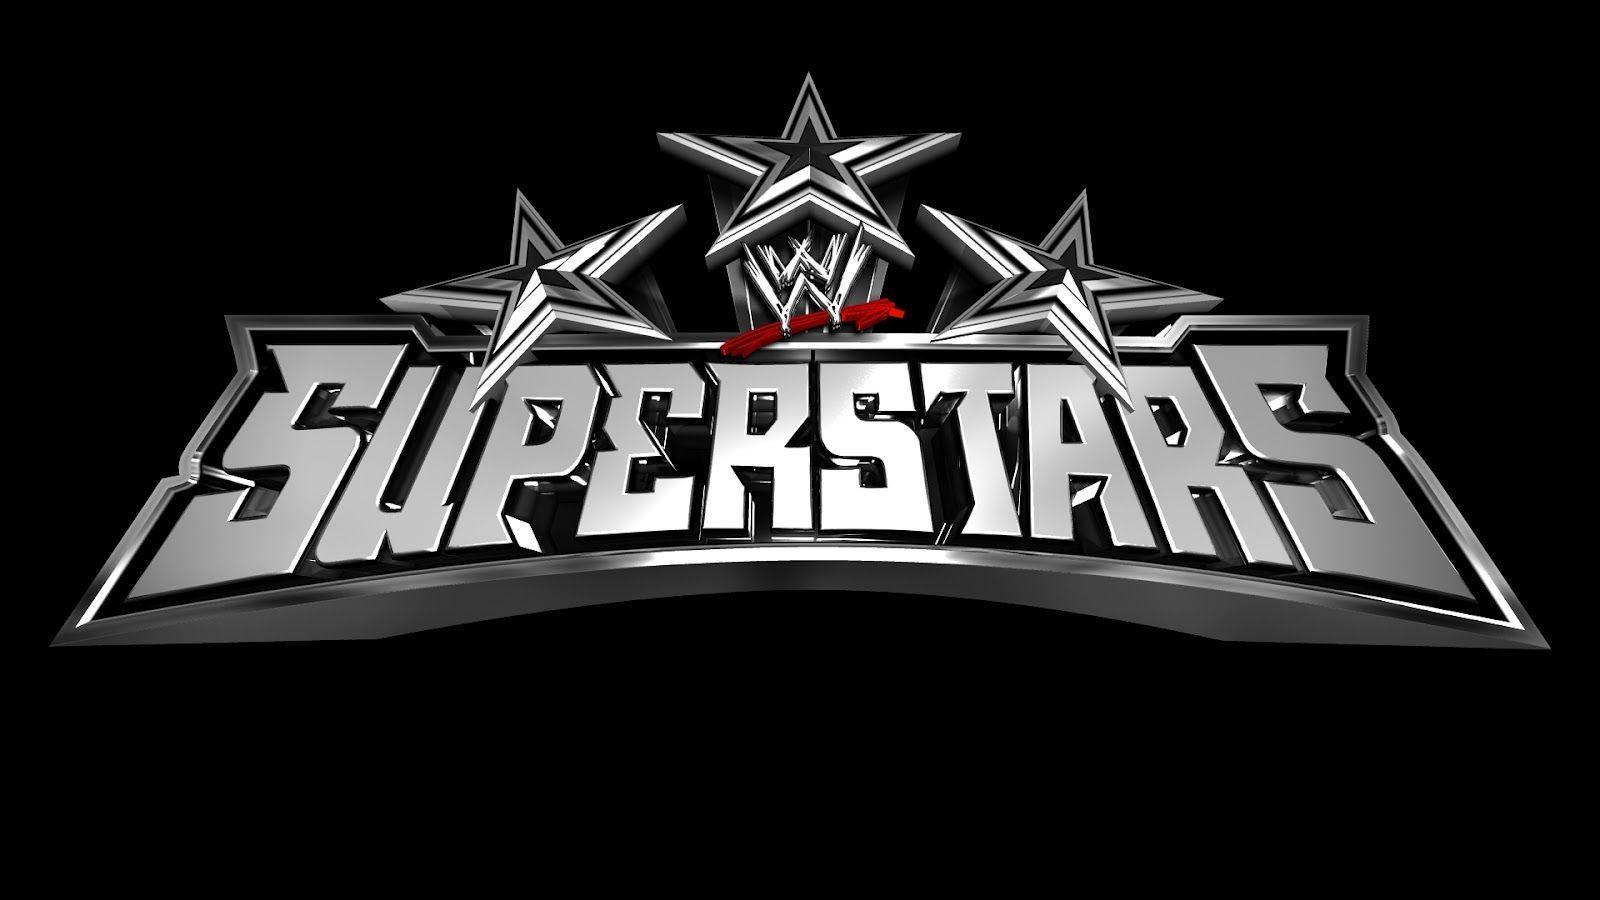 WWE WALLPAPERS: wwe logo wallpaper. wwe logo image. wwe logo